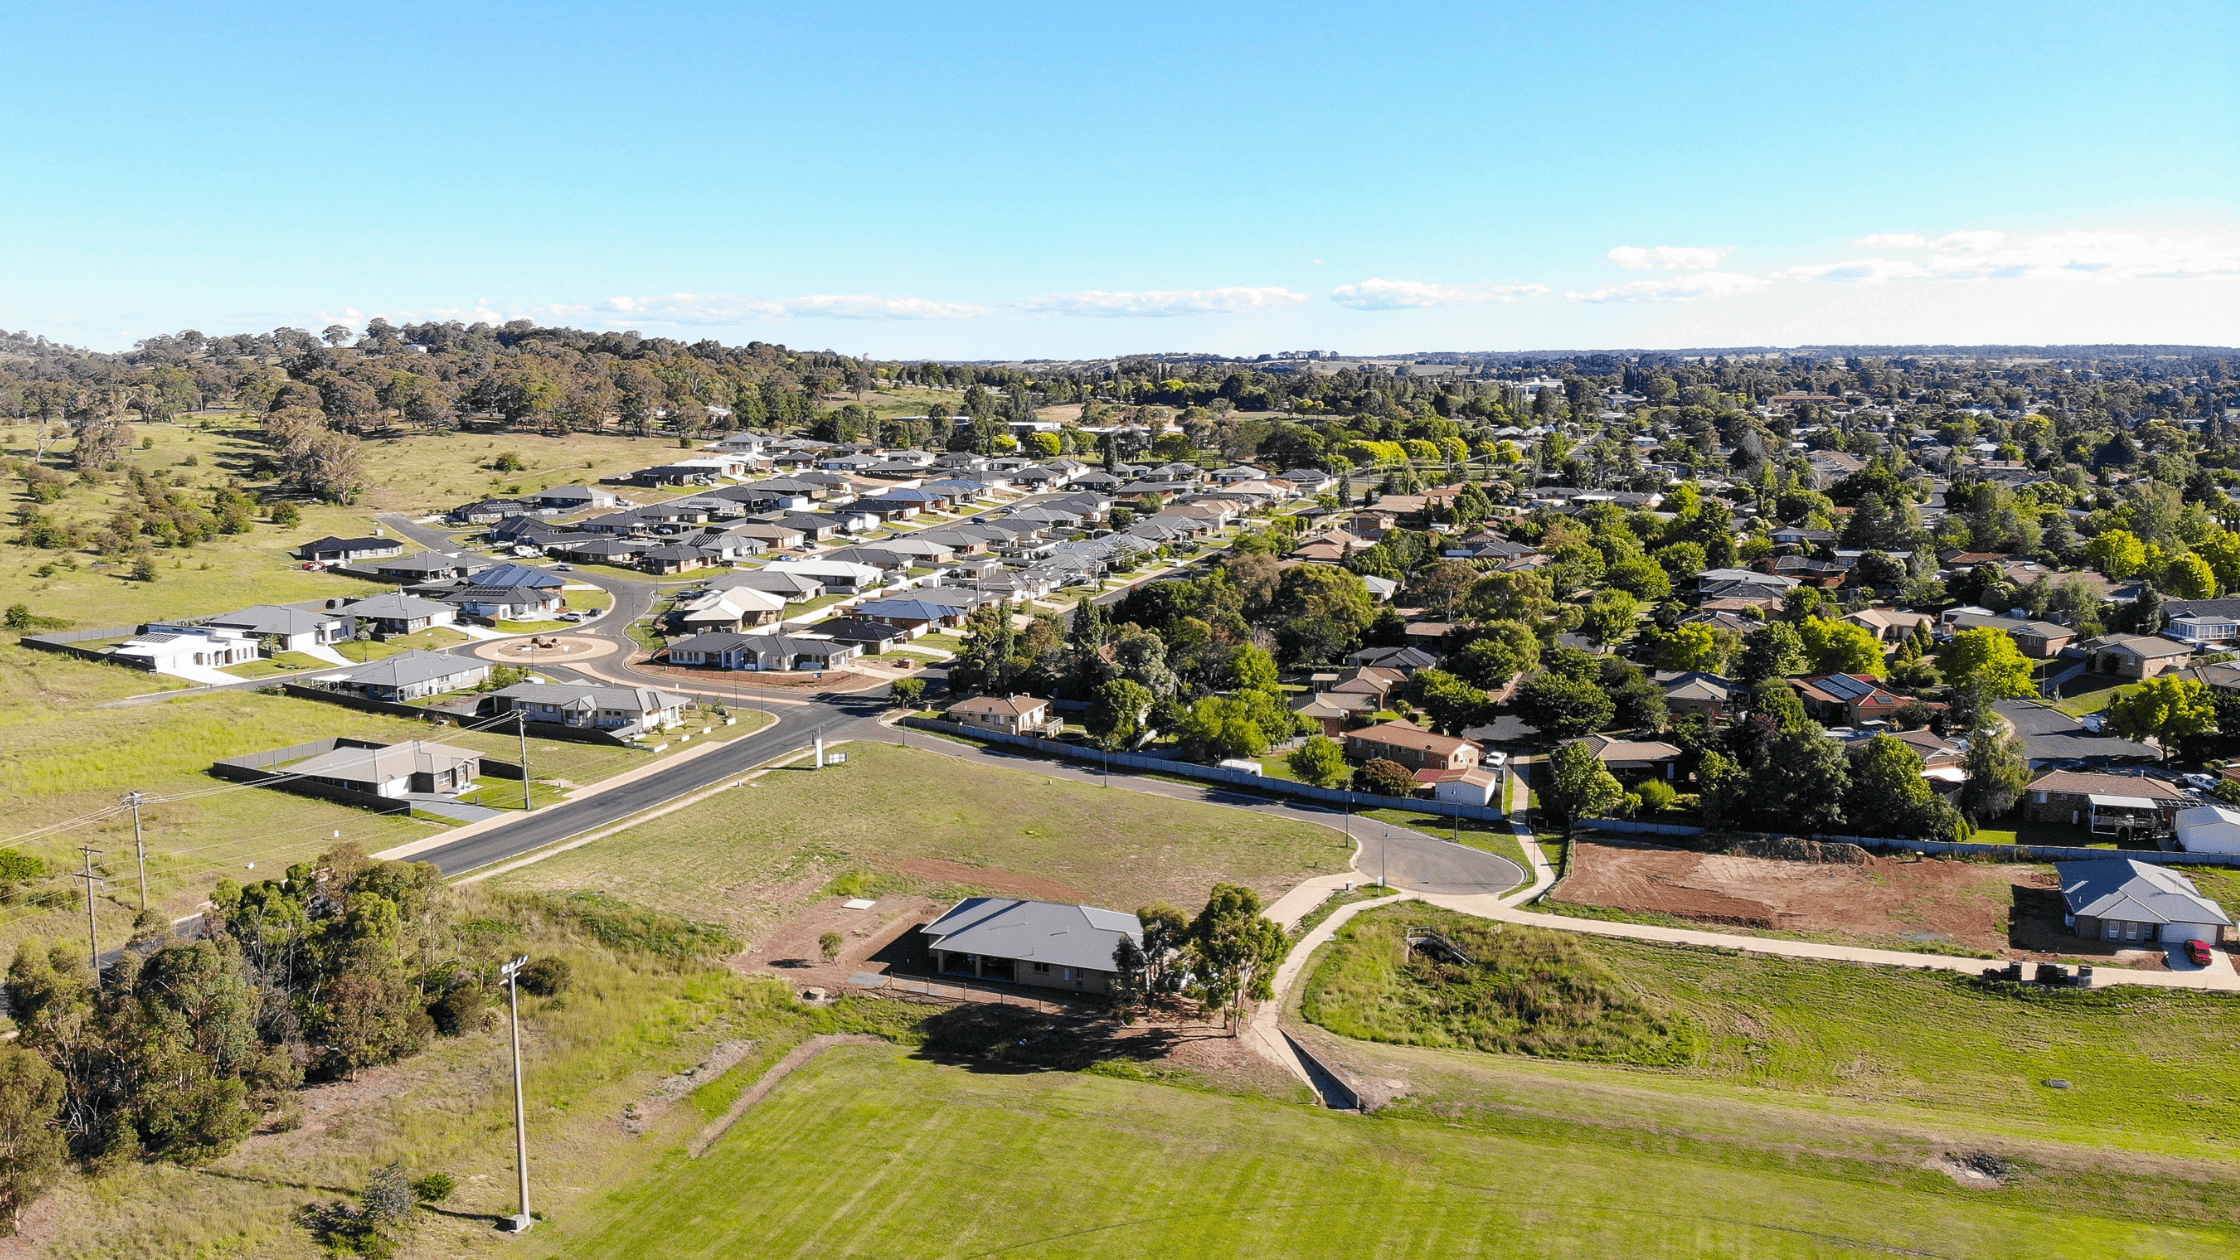 Aerial shot of rural town in Queensland Australia